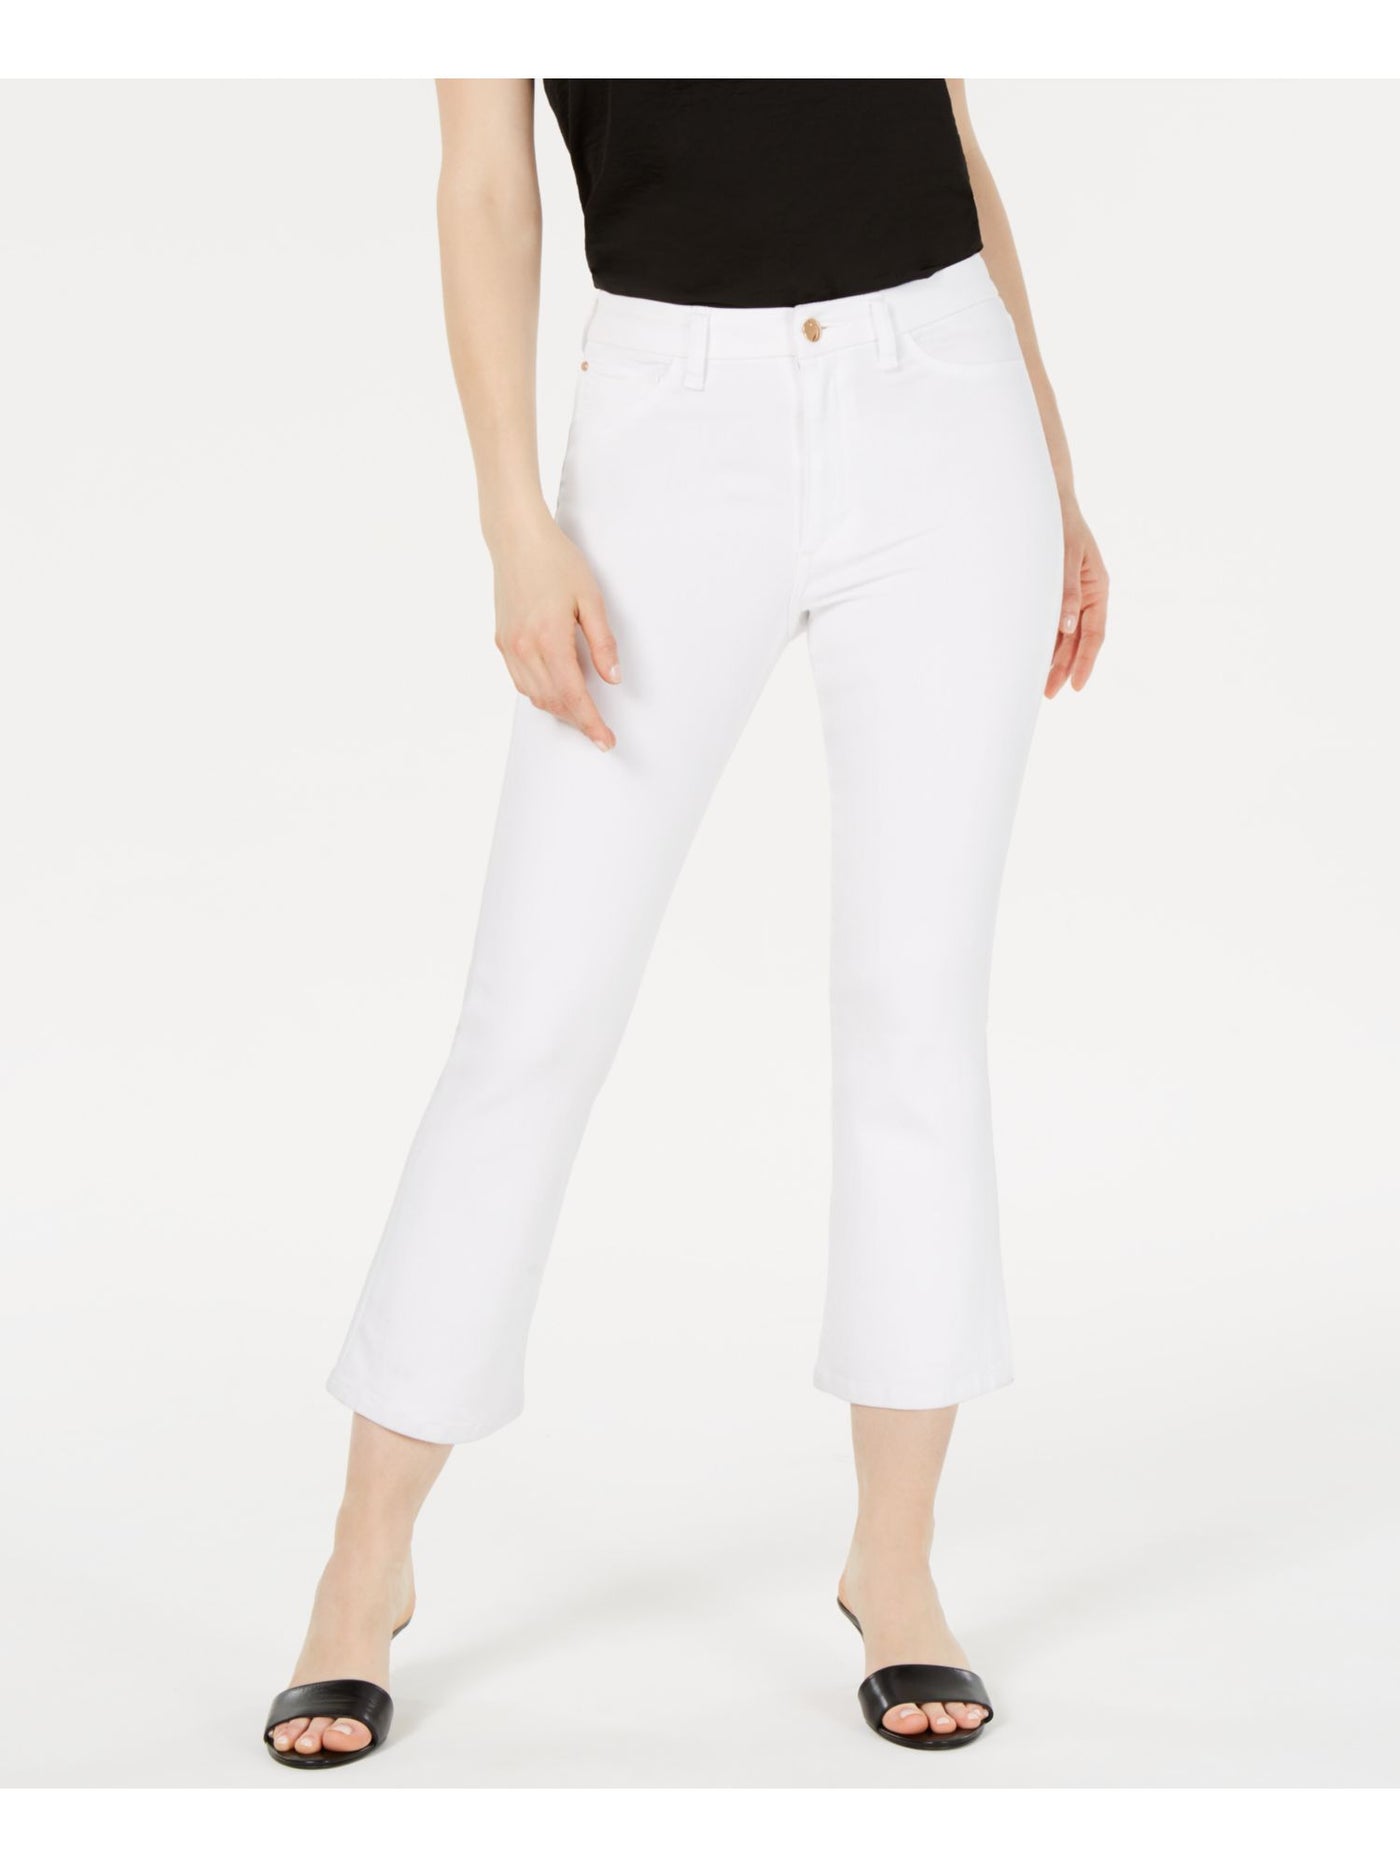 JOE'S Womens White Jeans 32 Waist